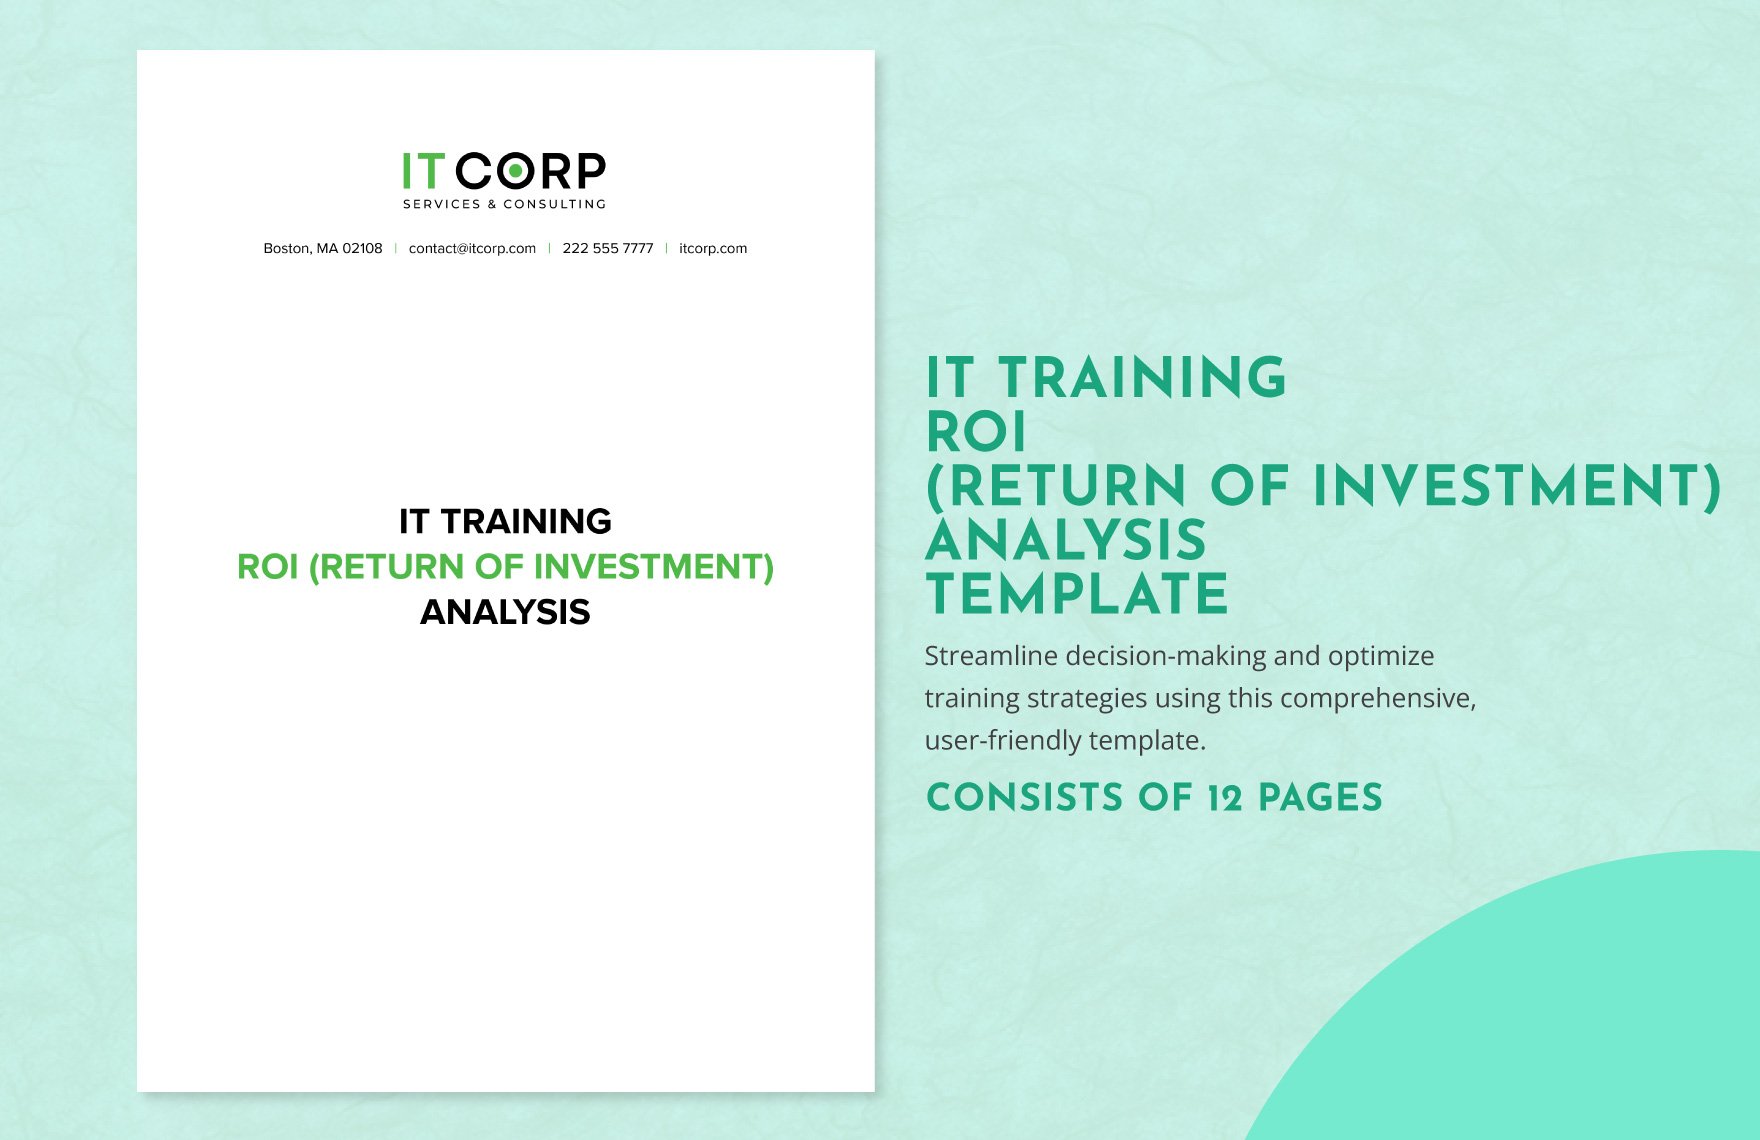 IT Training ROI (Return on Investment) Analysis Template